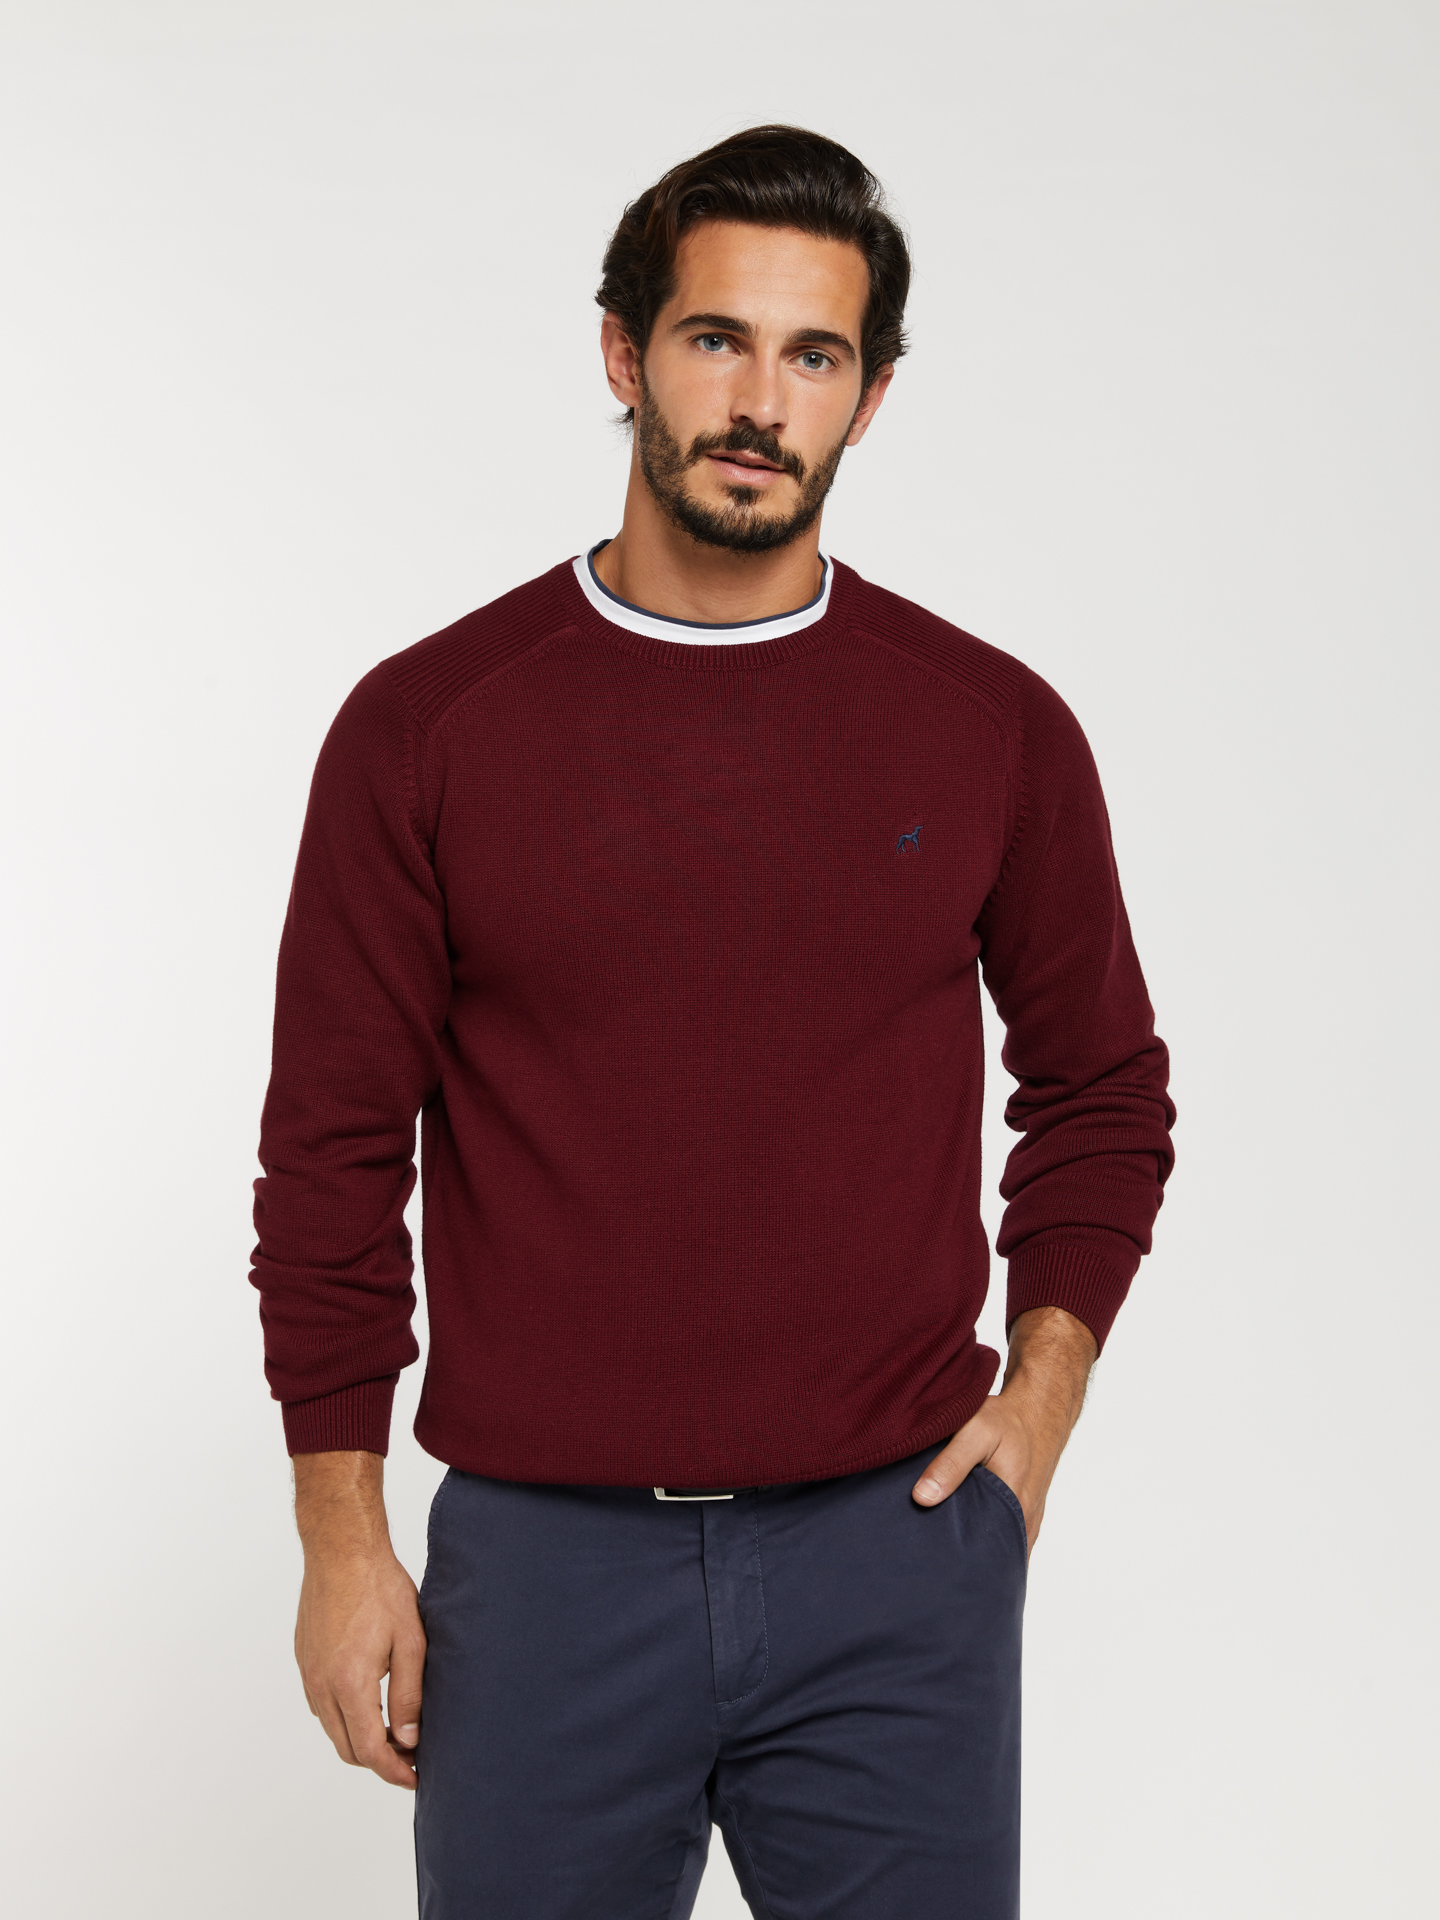 Sweater Bordeaux Casual Man